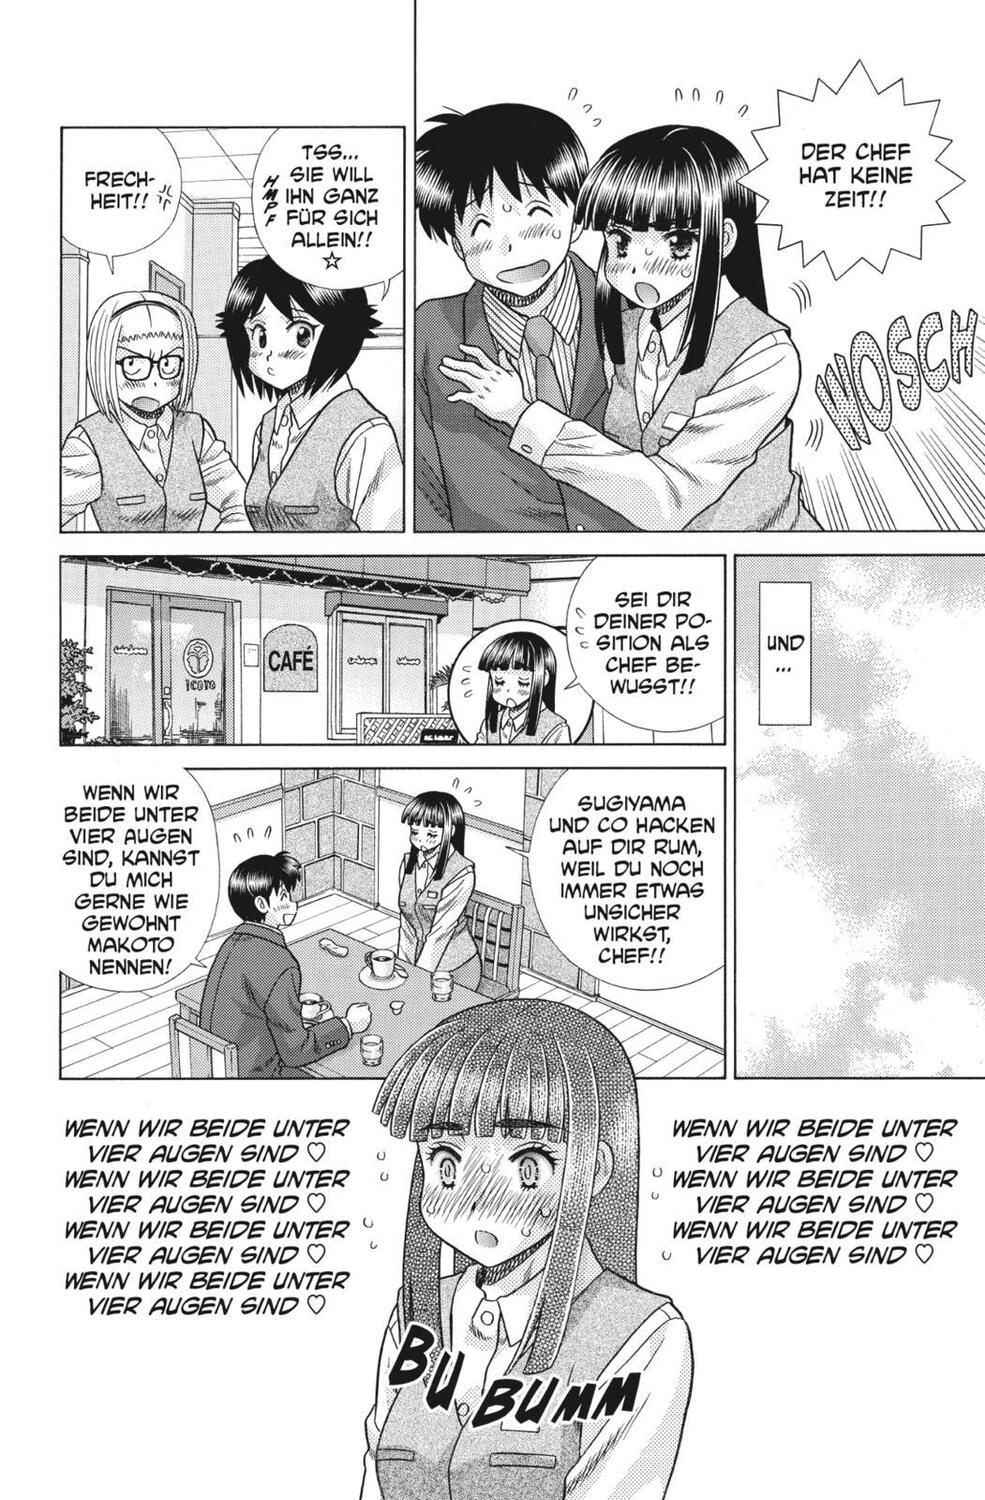 Bild: 9783551795885 | Manga Love Story 80 | Katsu Aki | Taschenbuch | Manga Love Story